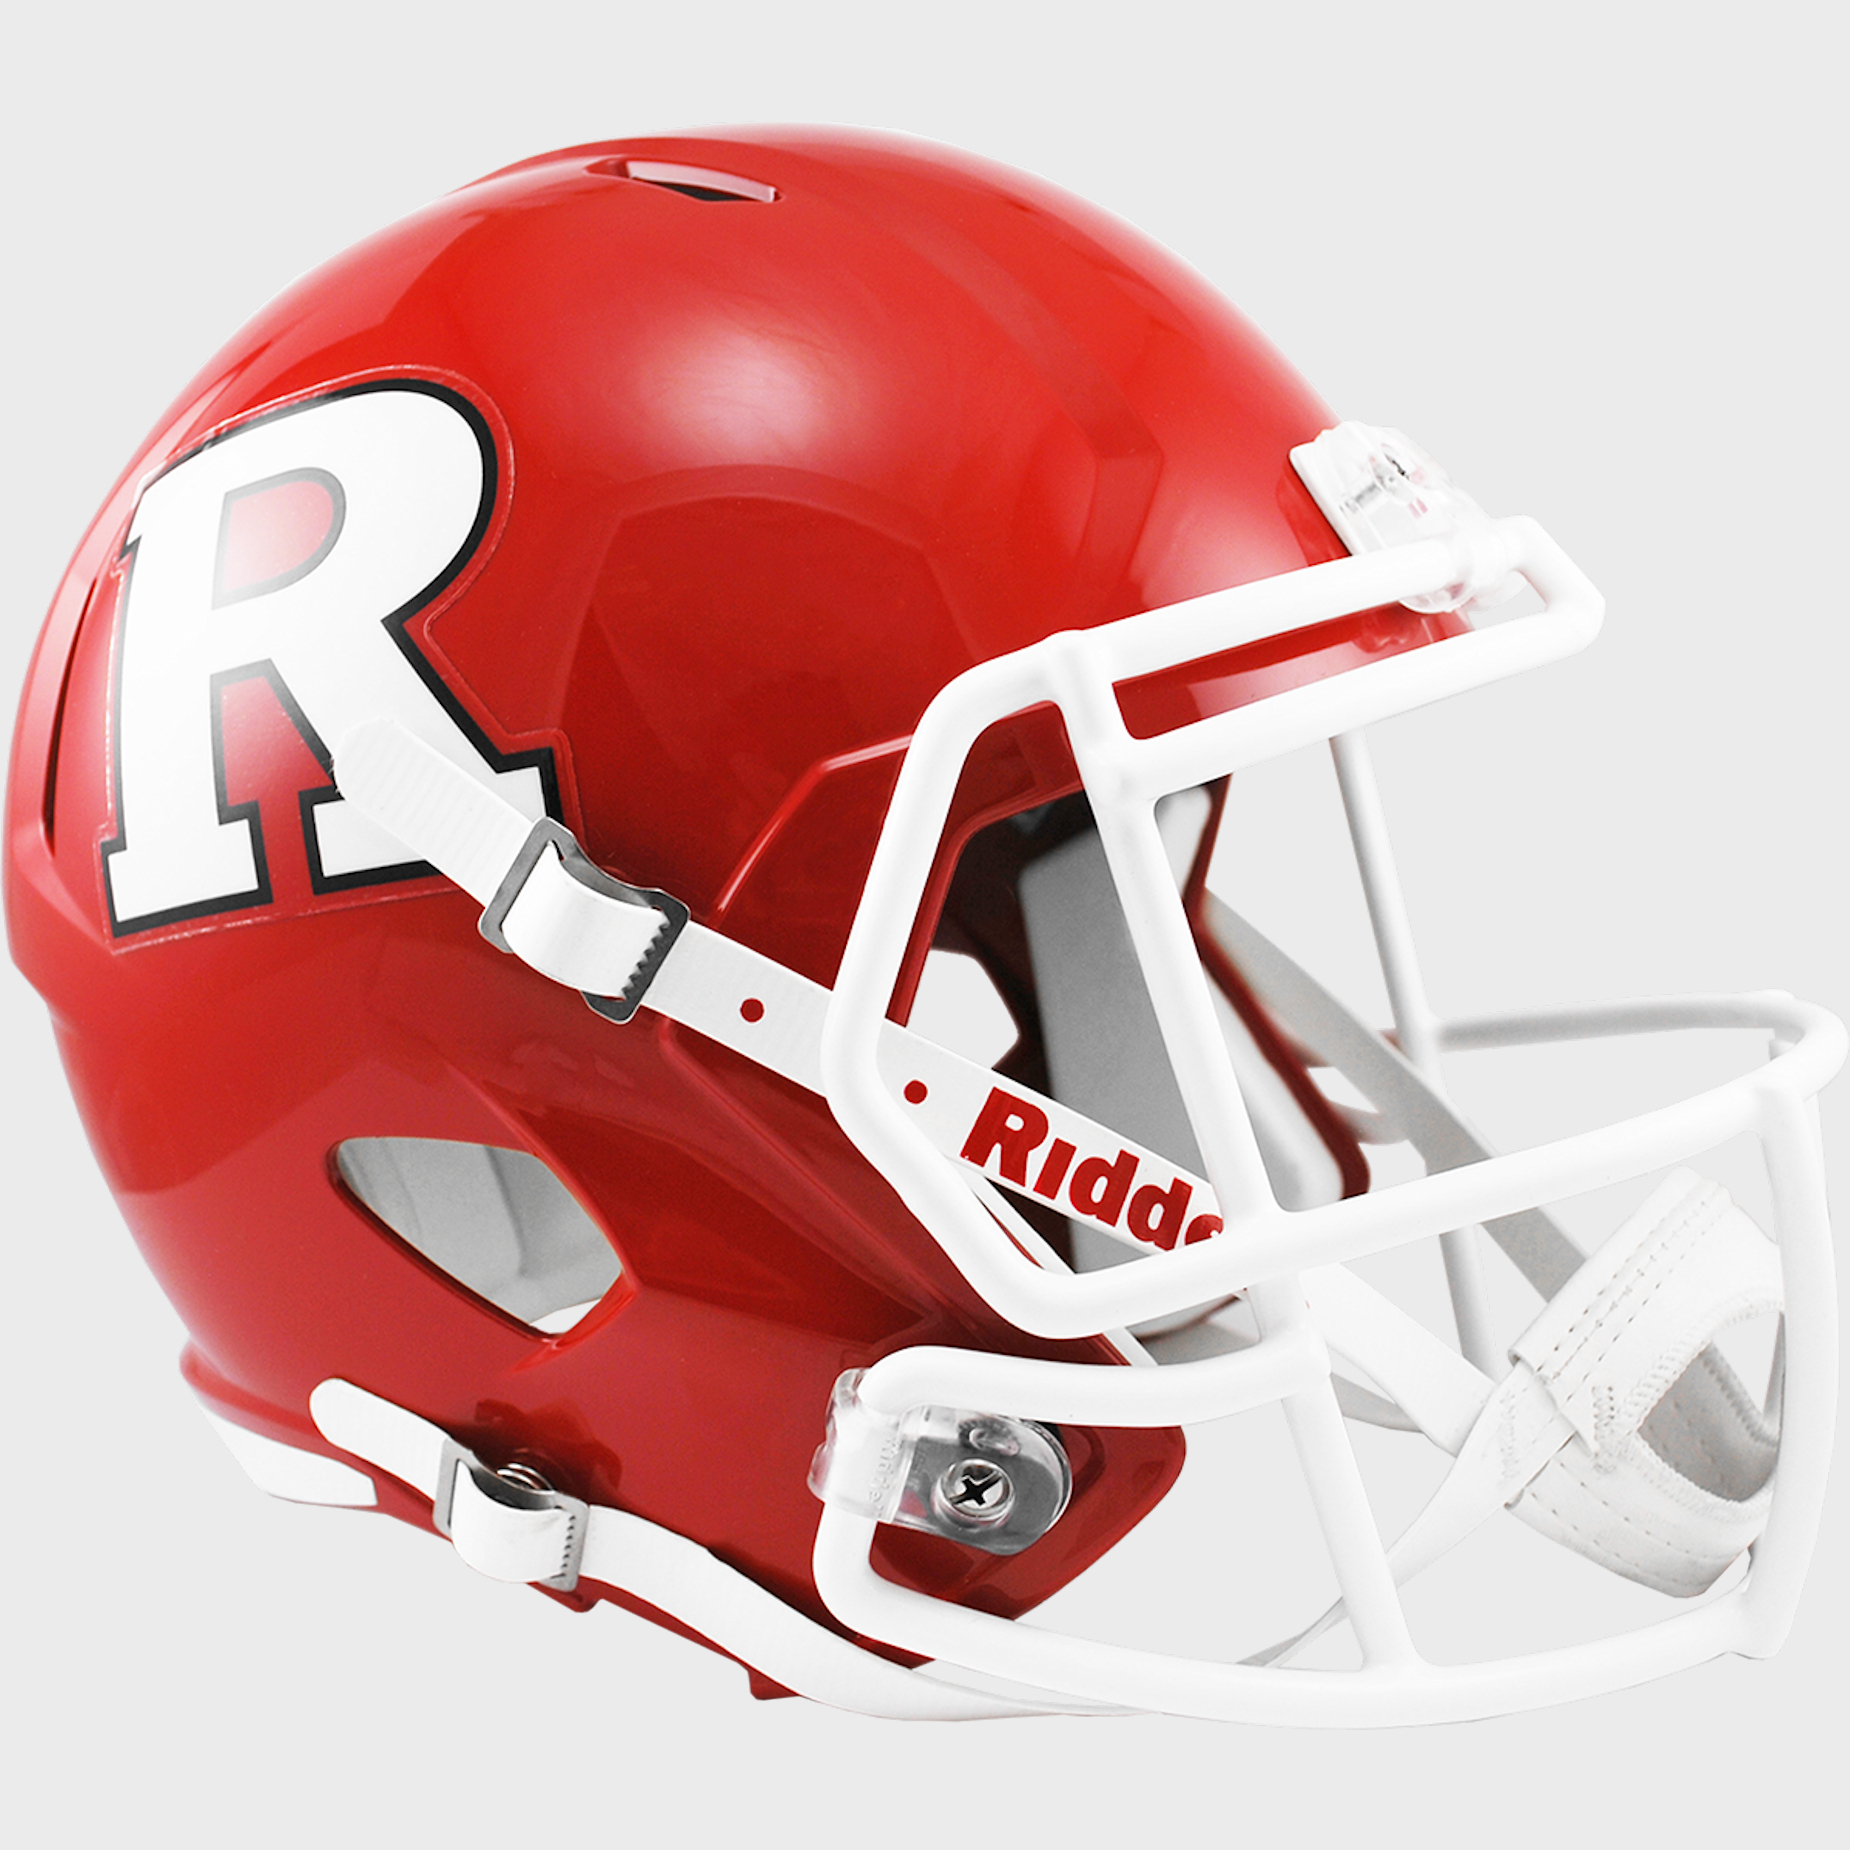 Rutgers Scarlet Knights full size replica helmet